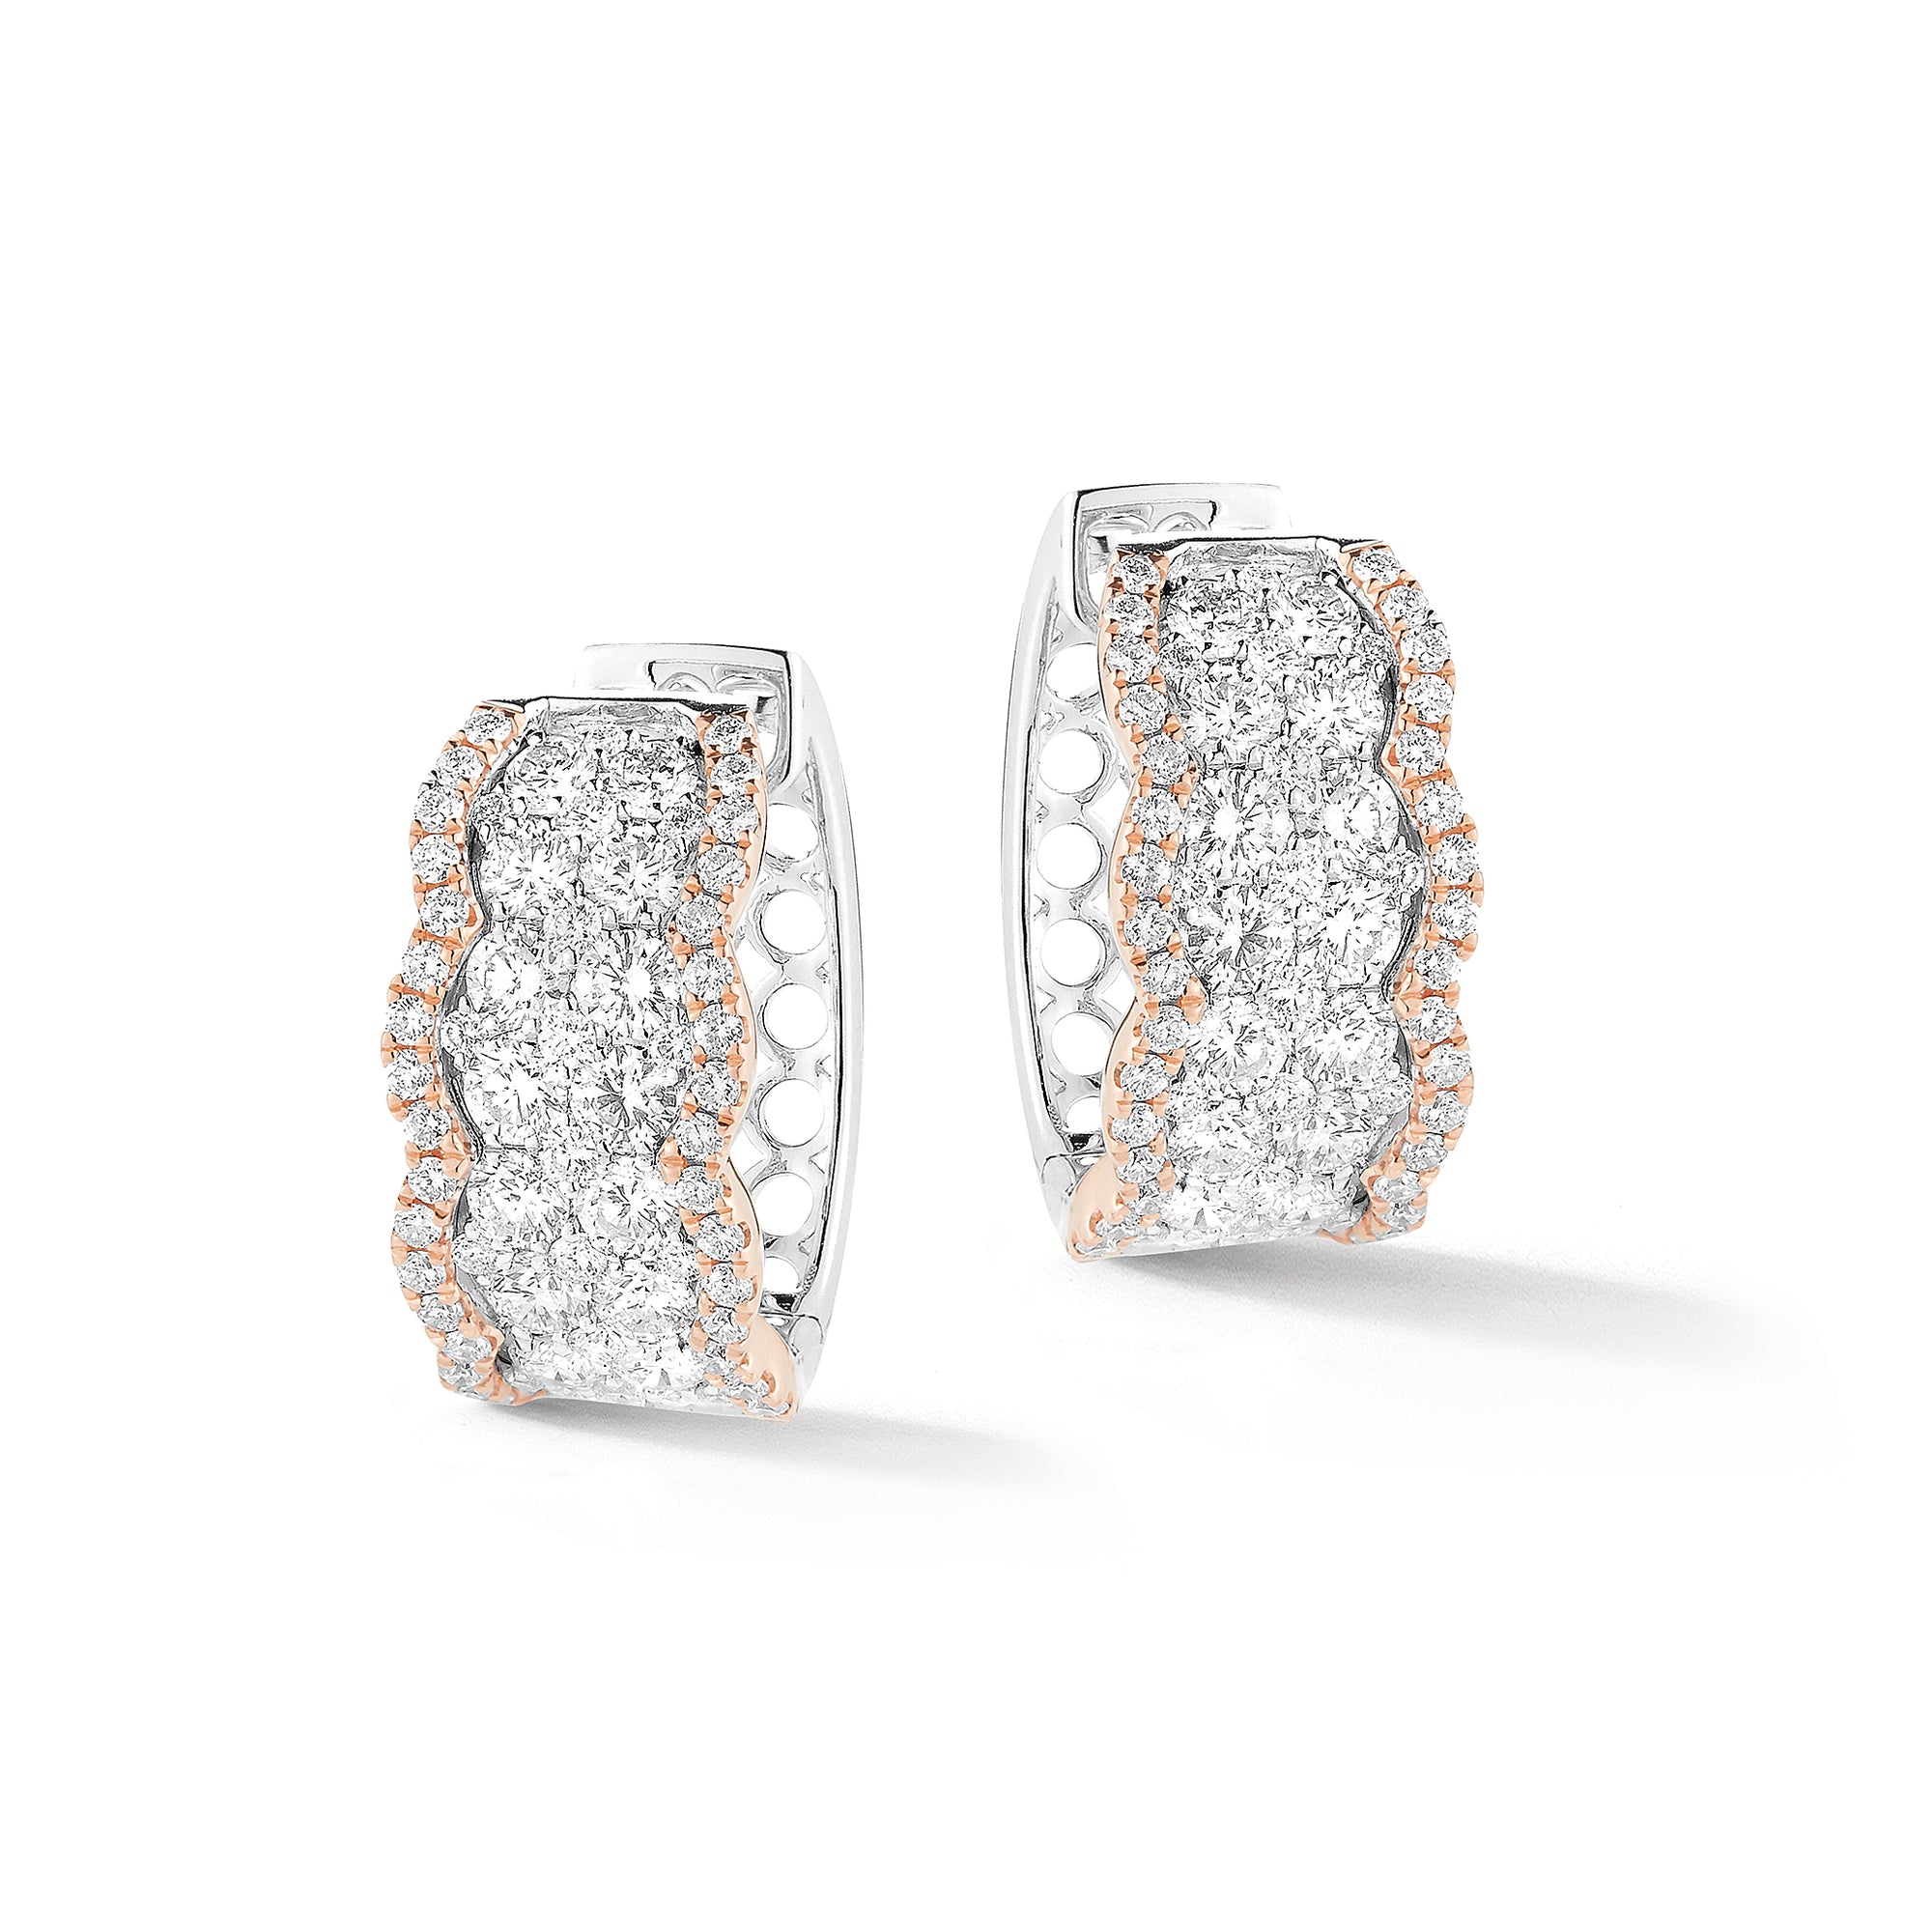 Curvy Diamond Earrings - 18k gold weighing 7.32 grams  - 138 round cluster-set diamonds weighing 2.38 carats